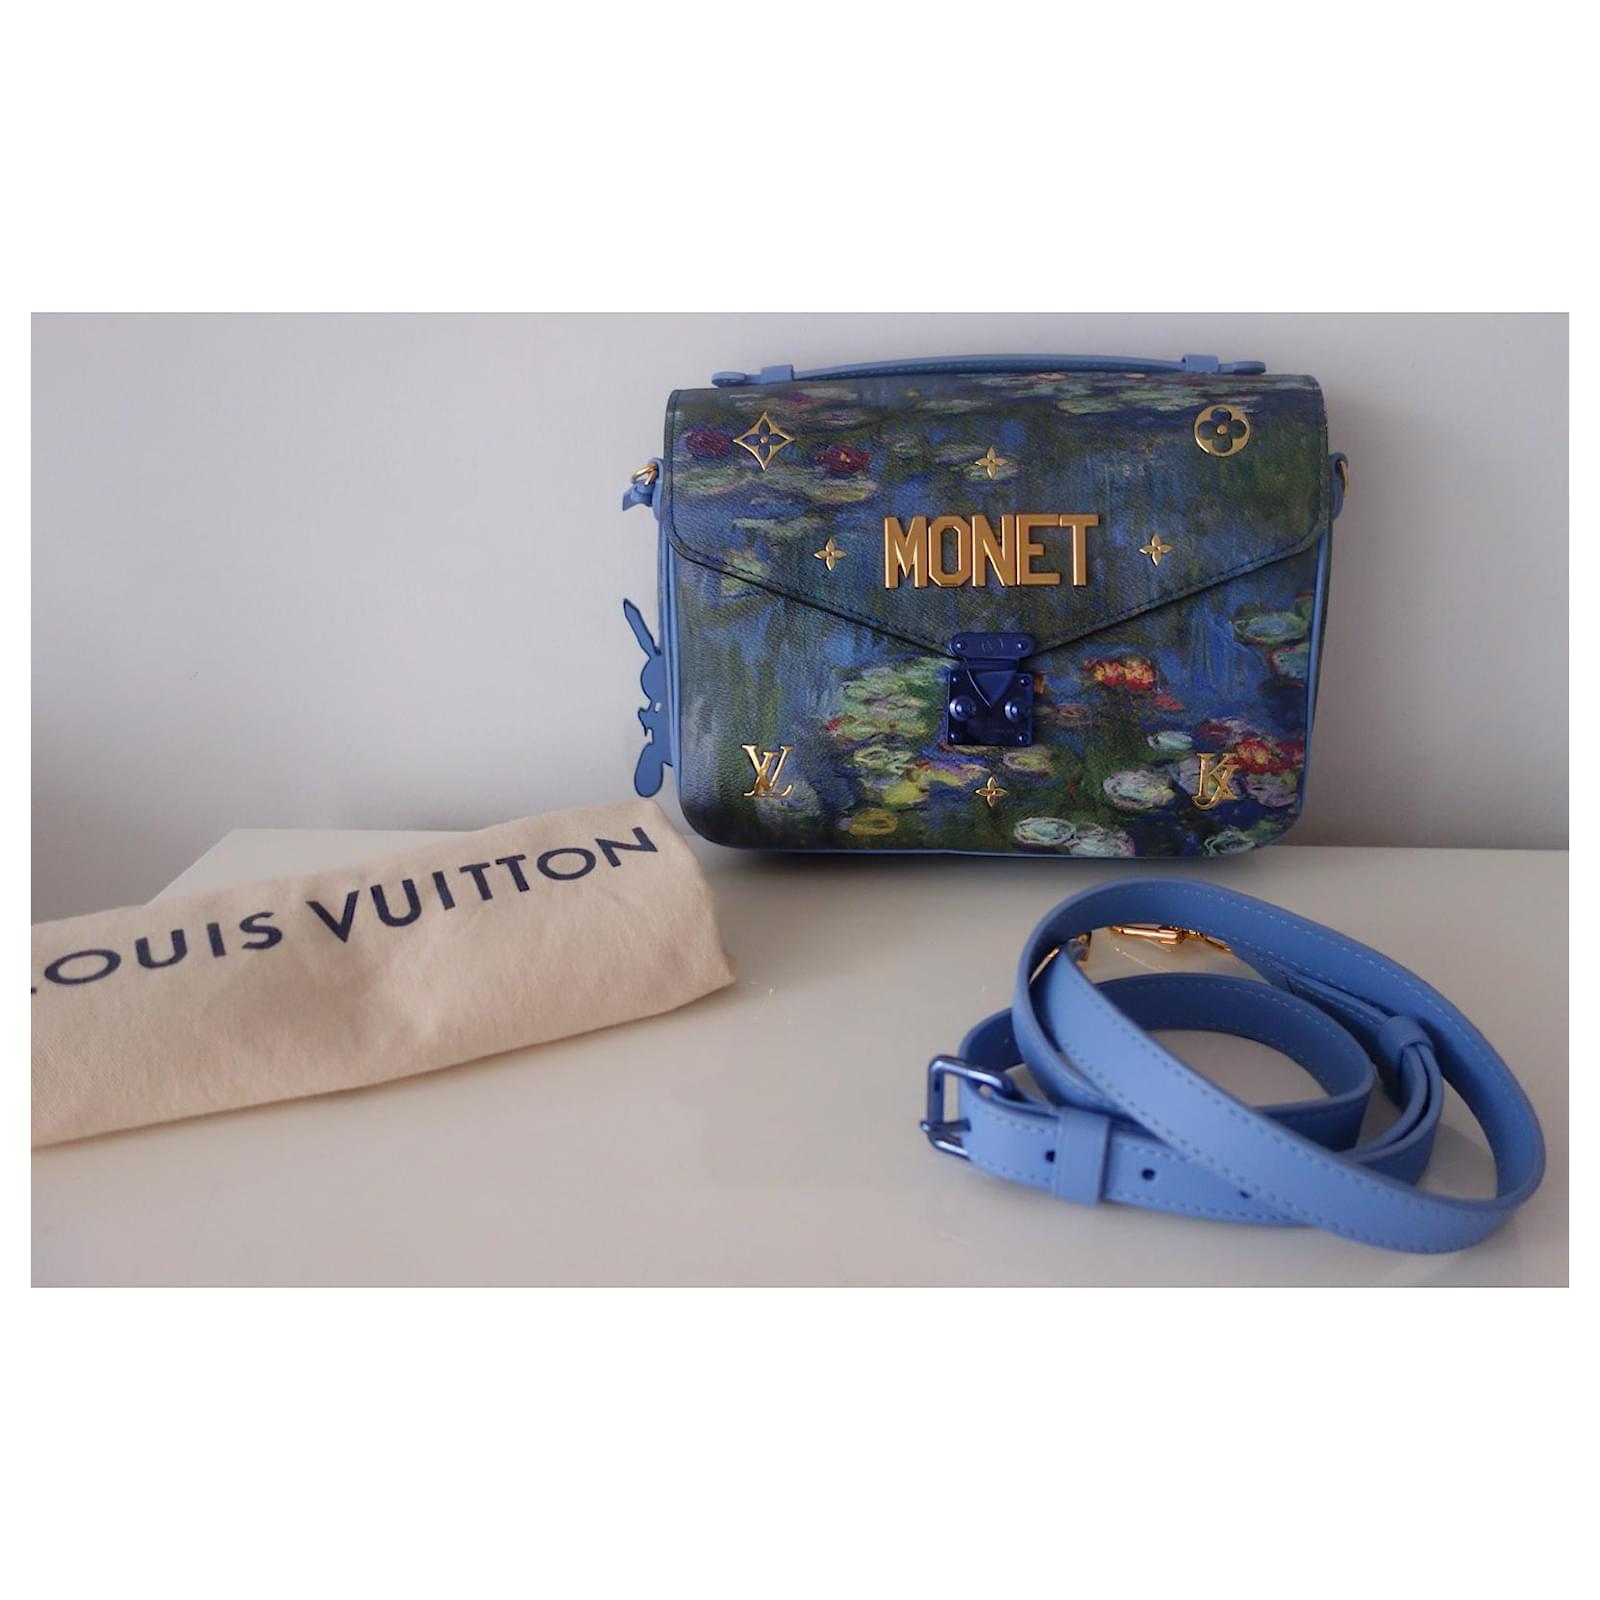 Louis Vuitton Jeff Koons Monet Metis Pochette Bag